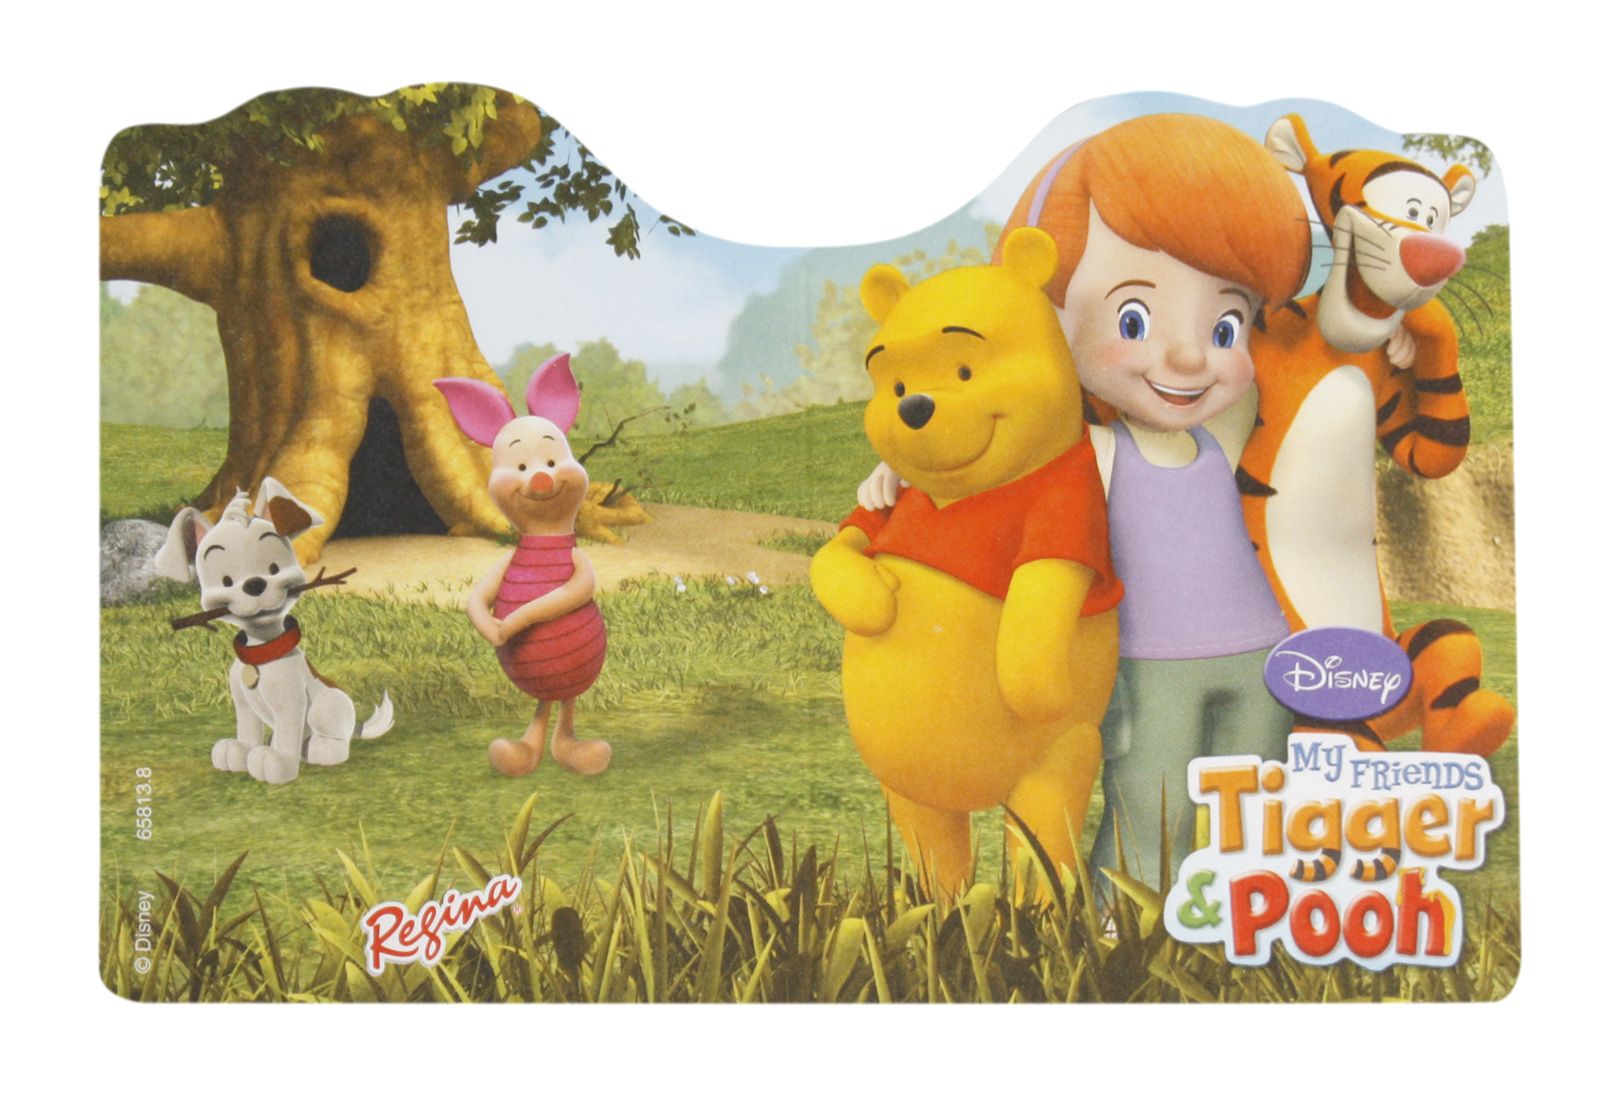 Tigger and Pooh - Invitation Card